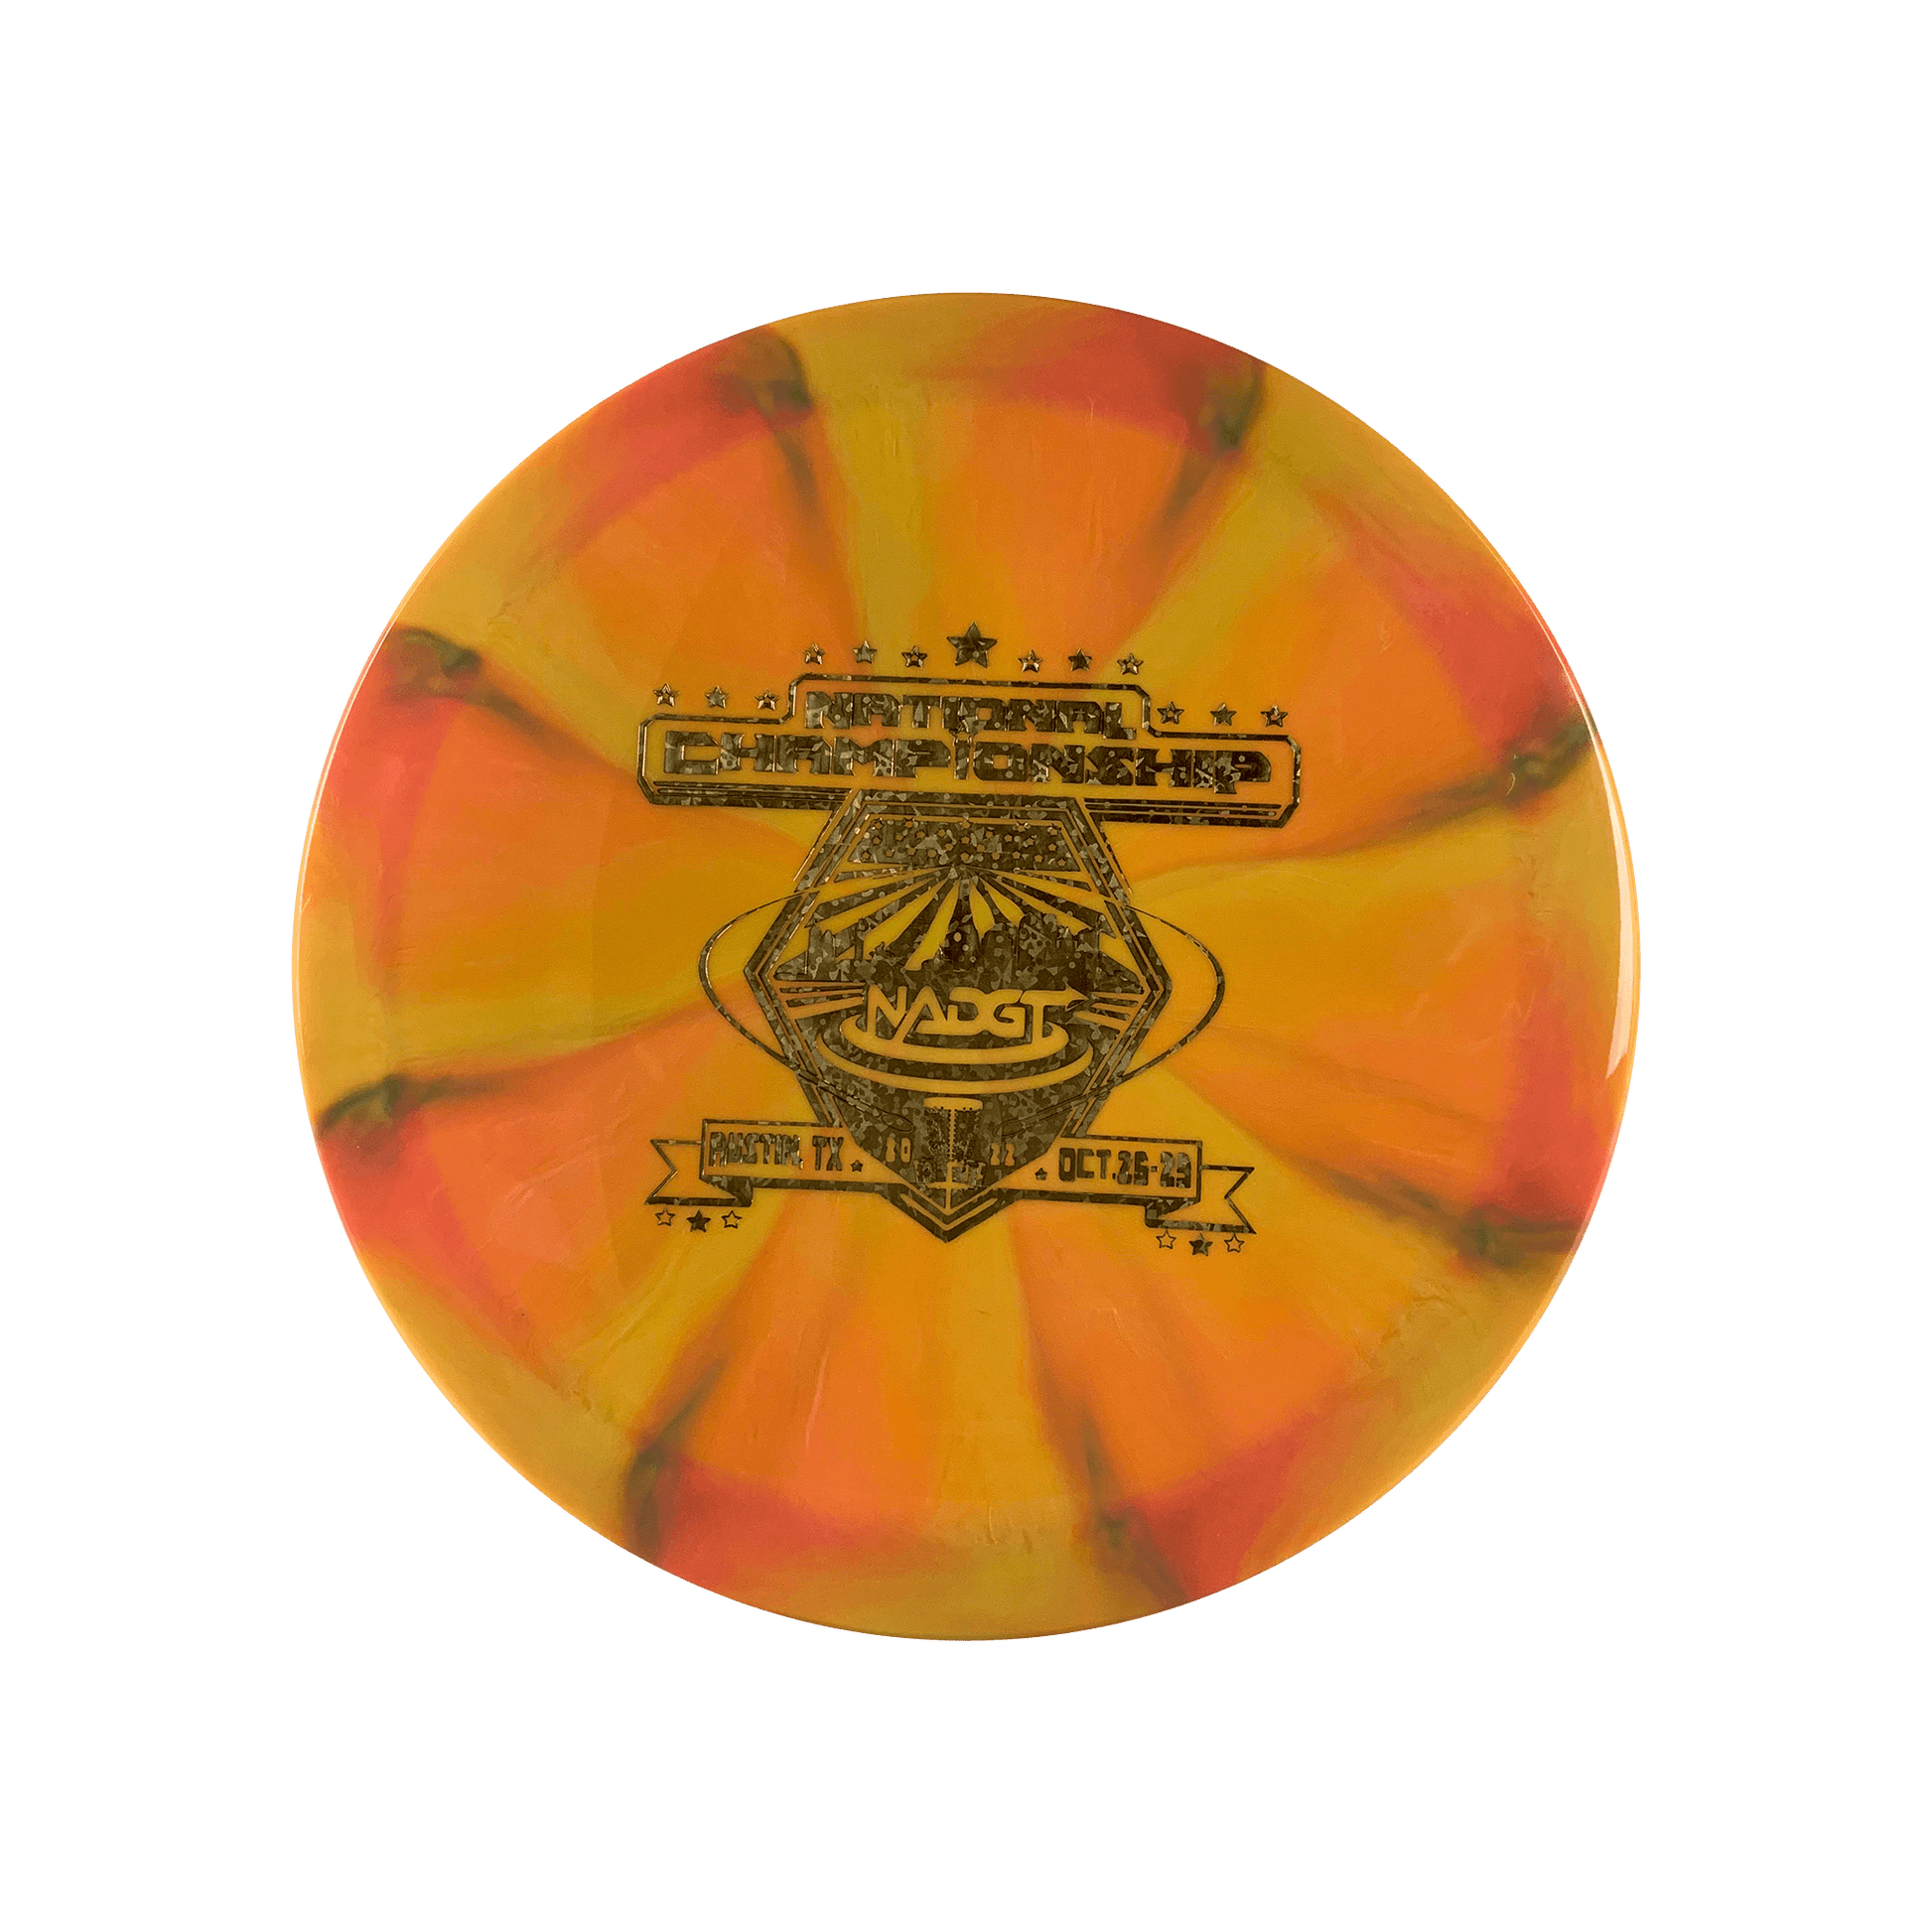 Apex Swirl Diamondback - NADGT National Championship 2022 Disc Mint Discs multi / orange 173 